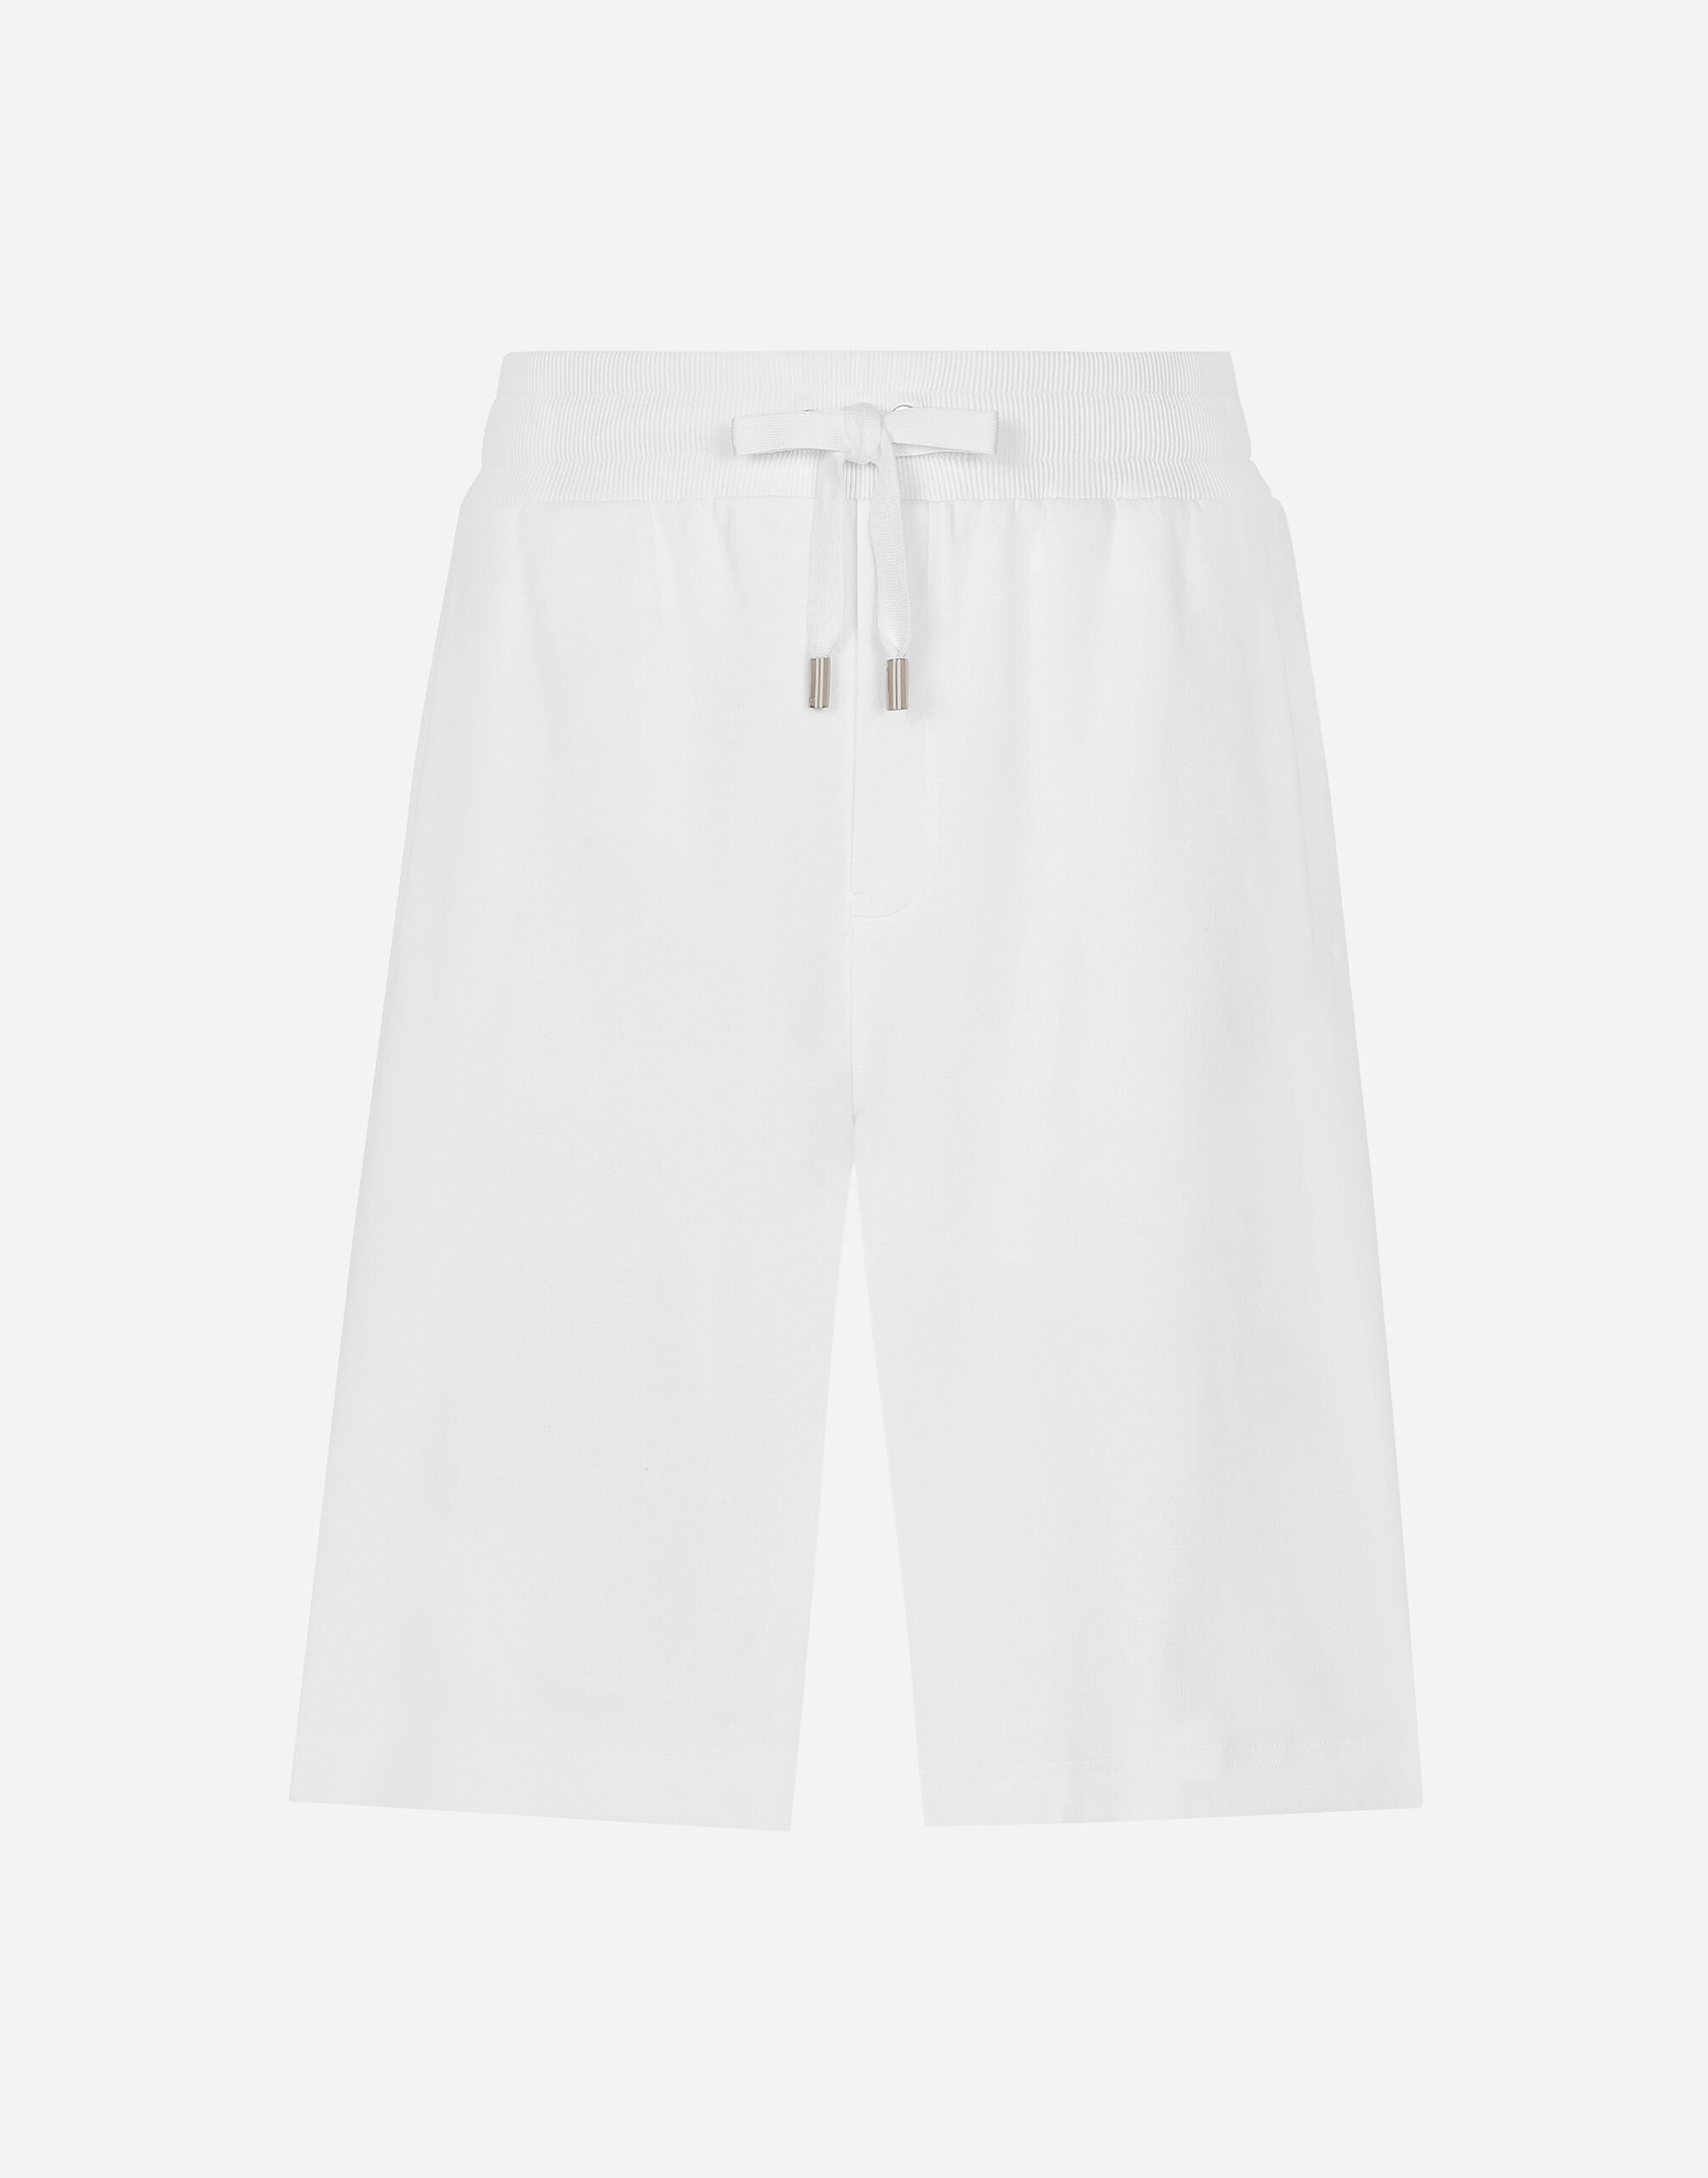 Dolce & Gabbana Jogging shorts with tag Print GVRMATHI1SV